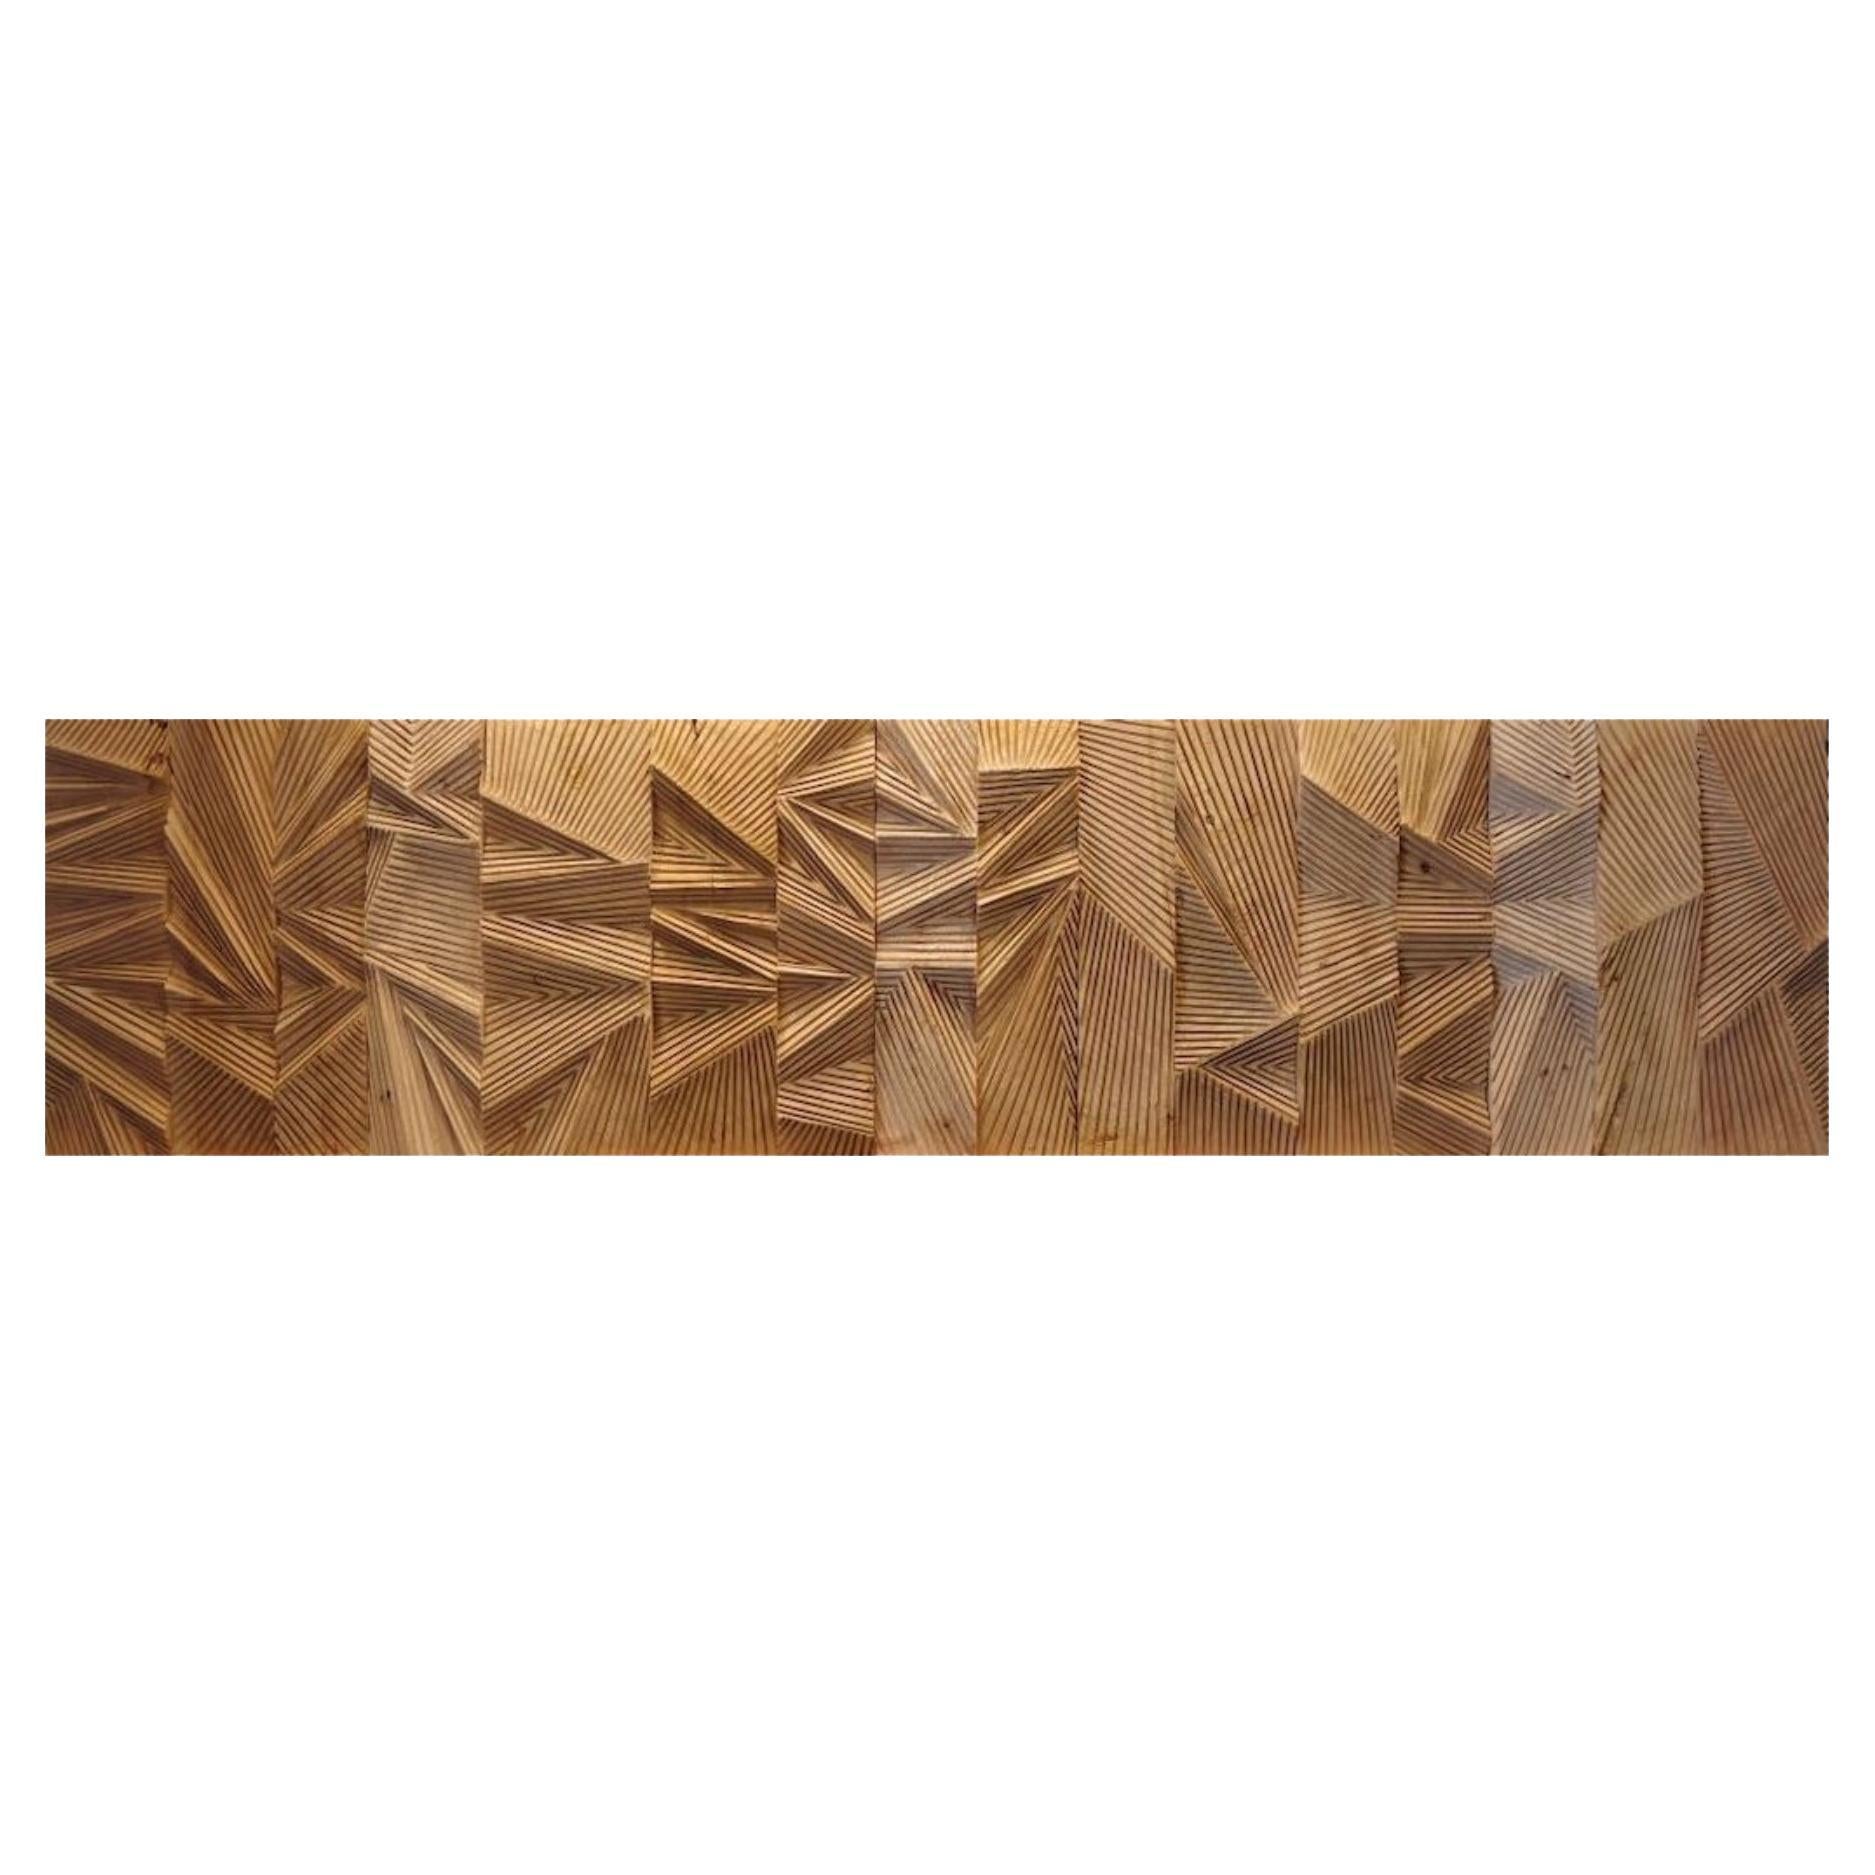 Sculpted Wood Panel Zig Zag by Etienne Moyat 2022 France, Cedar Wood